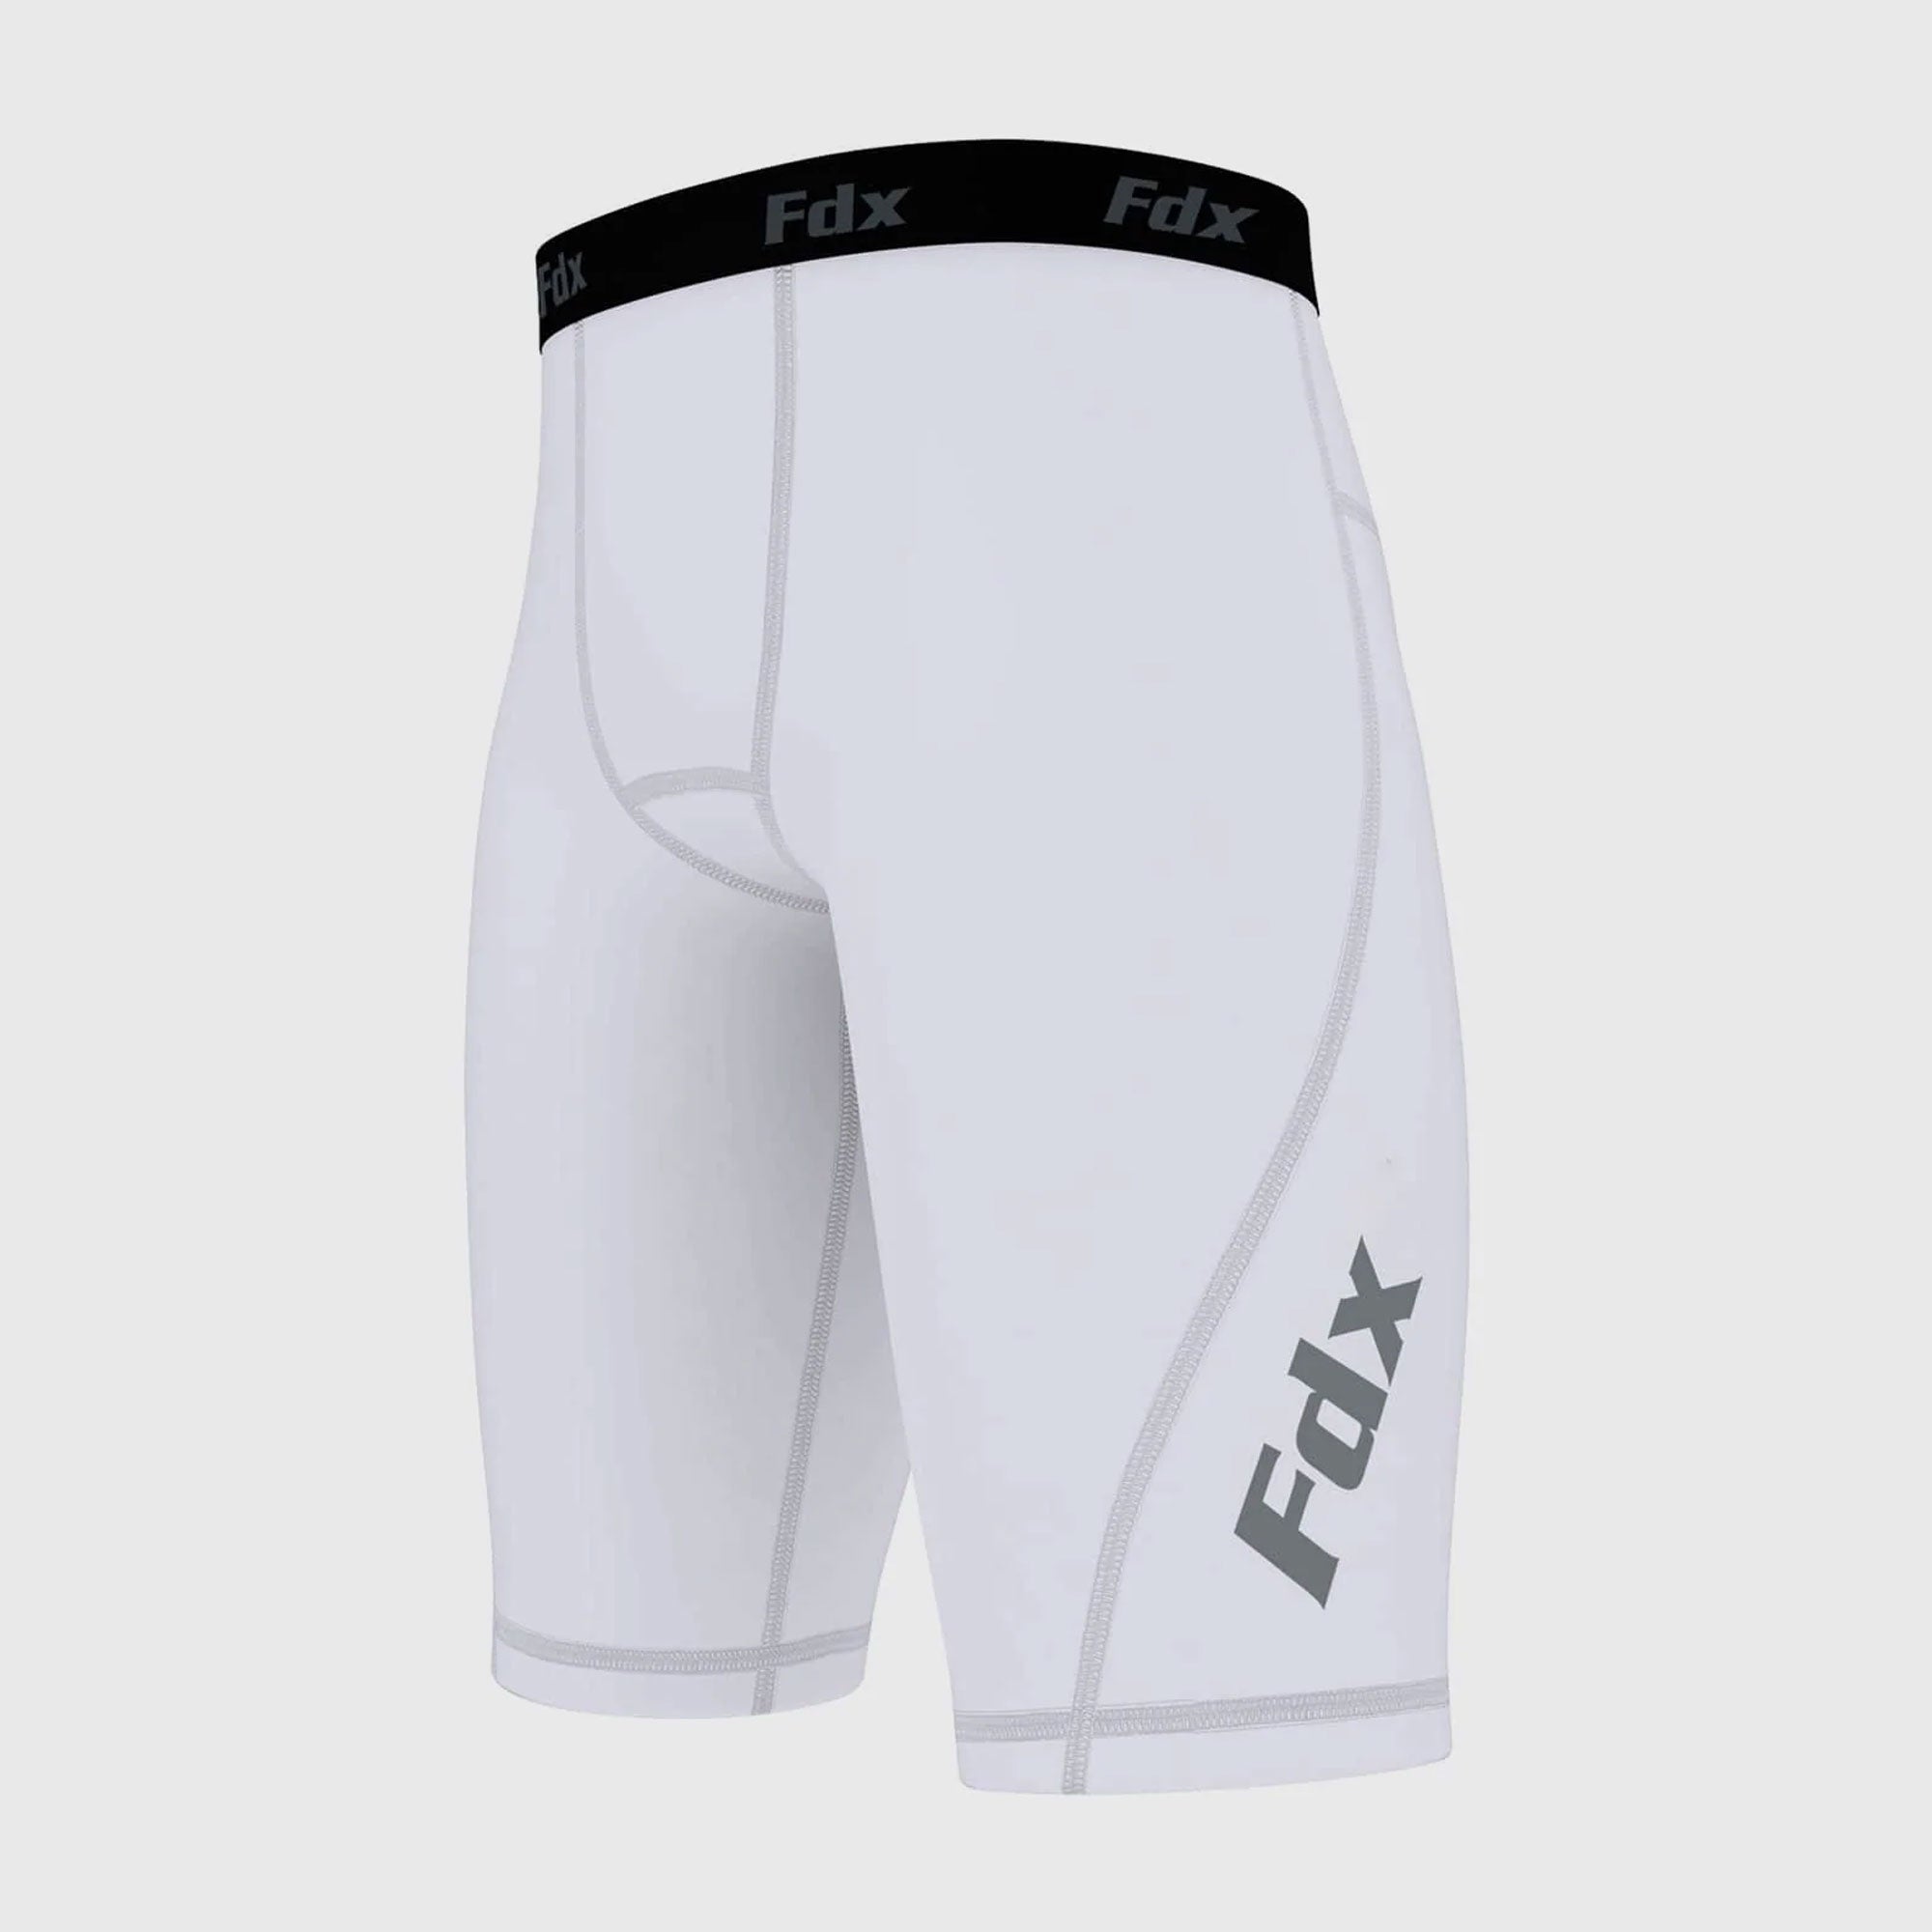 Fdx Men's White Compression Shorts Skin Tight Gym Pants